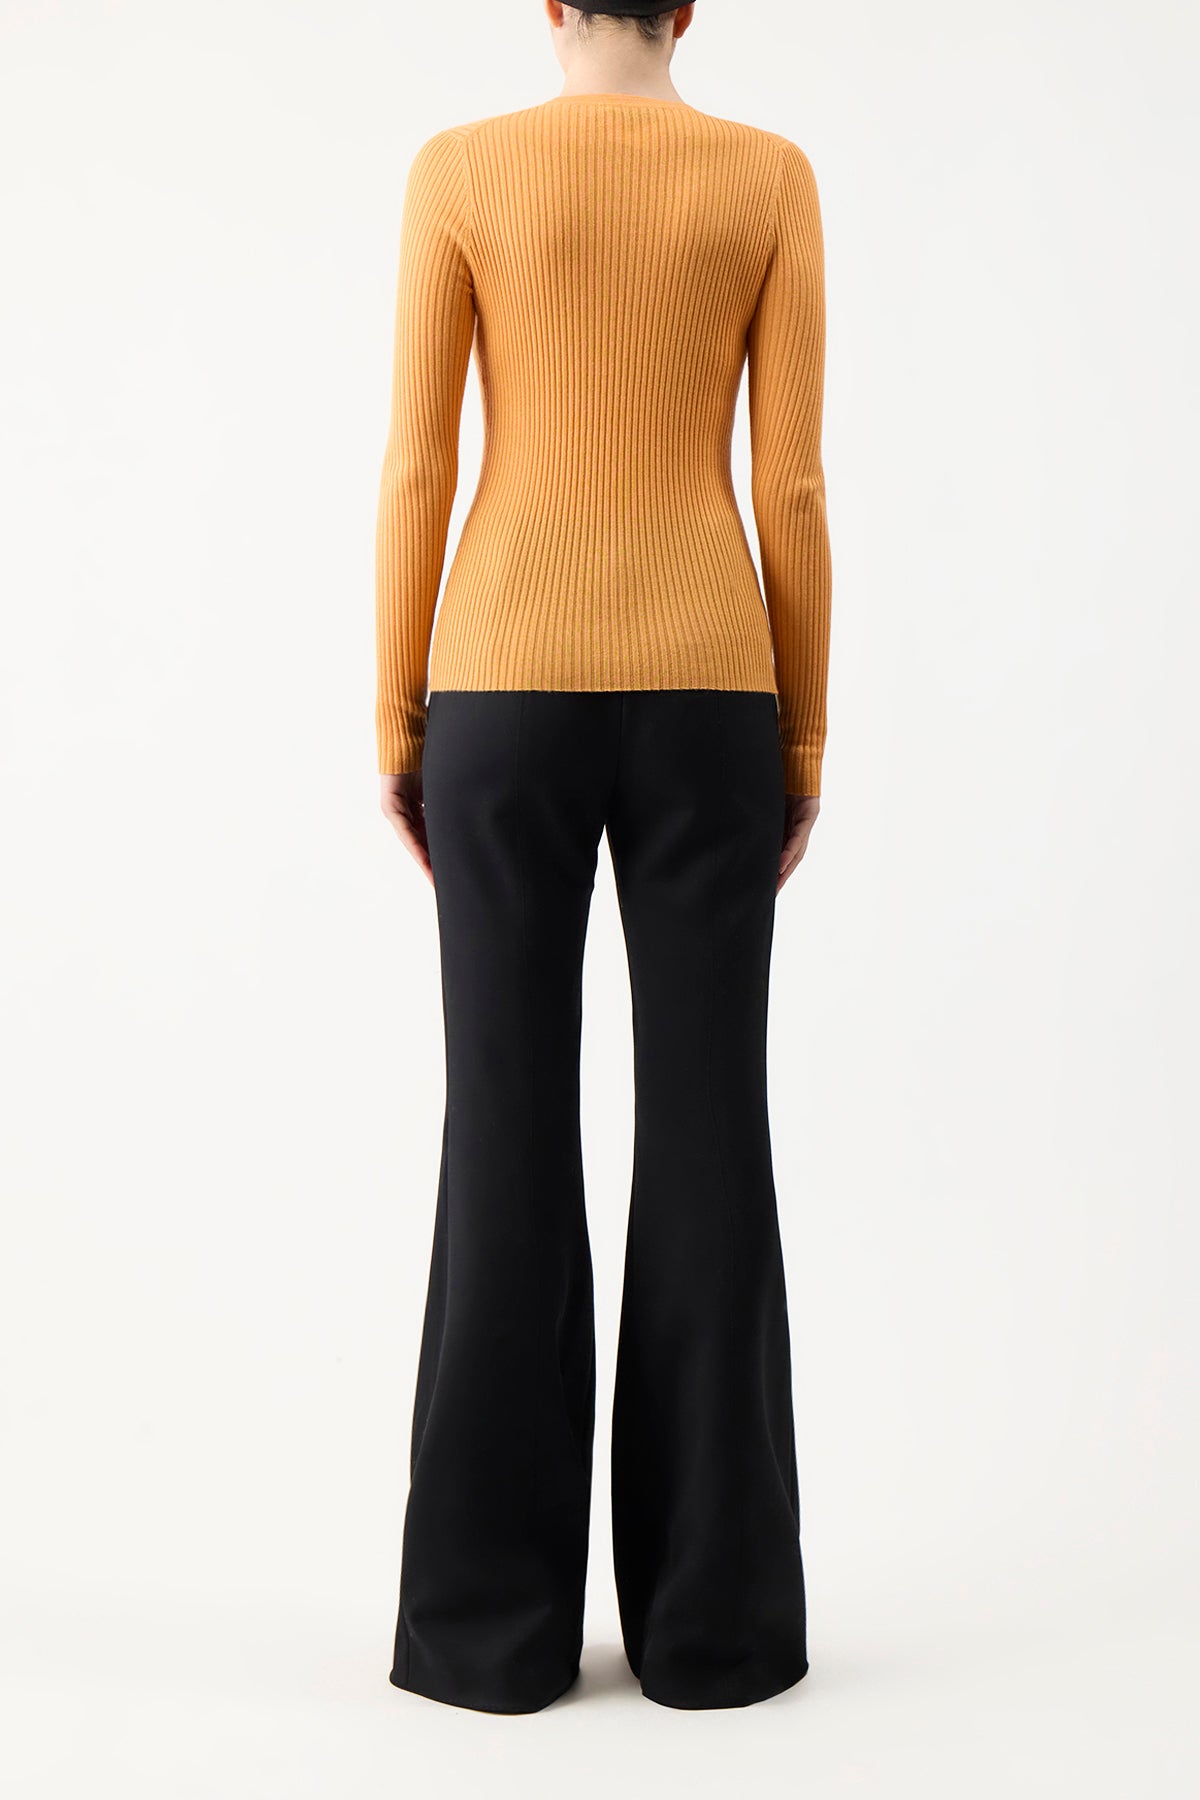 Browning Knit Sweater in Fluorescent Orange Cashmere Silk